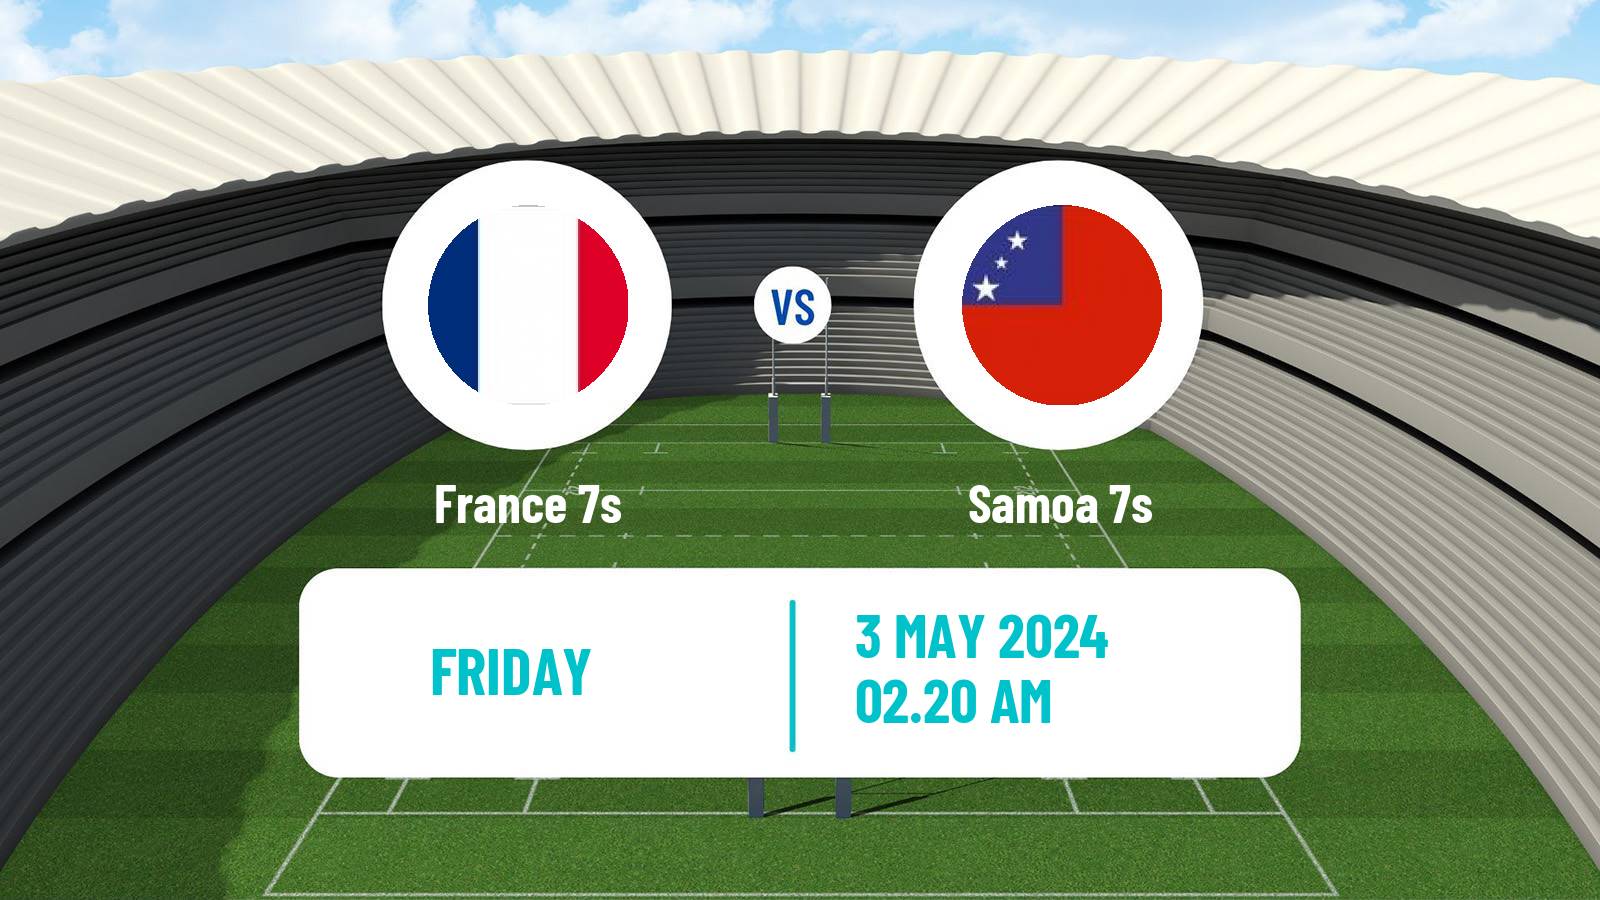 Rugby union Sevens World Series - Singapore France 7s - Samoa 7s